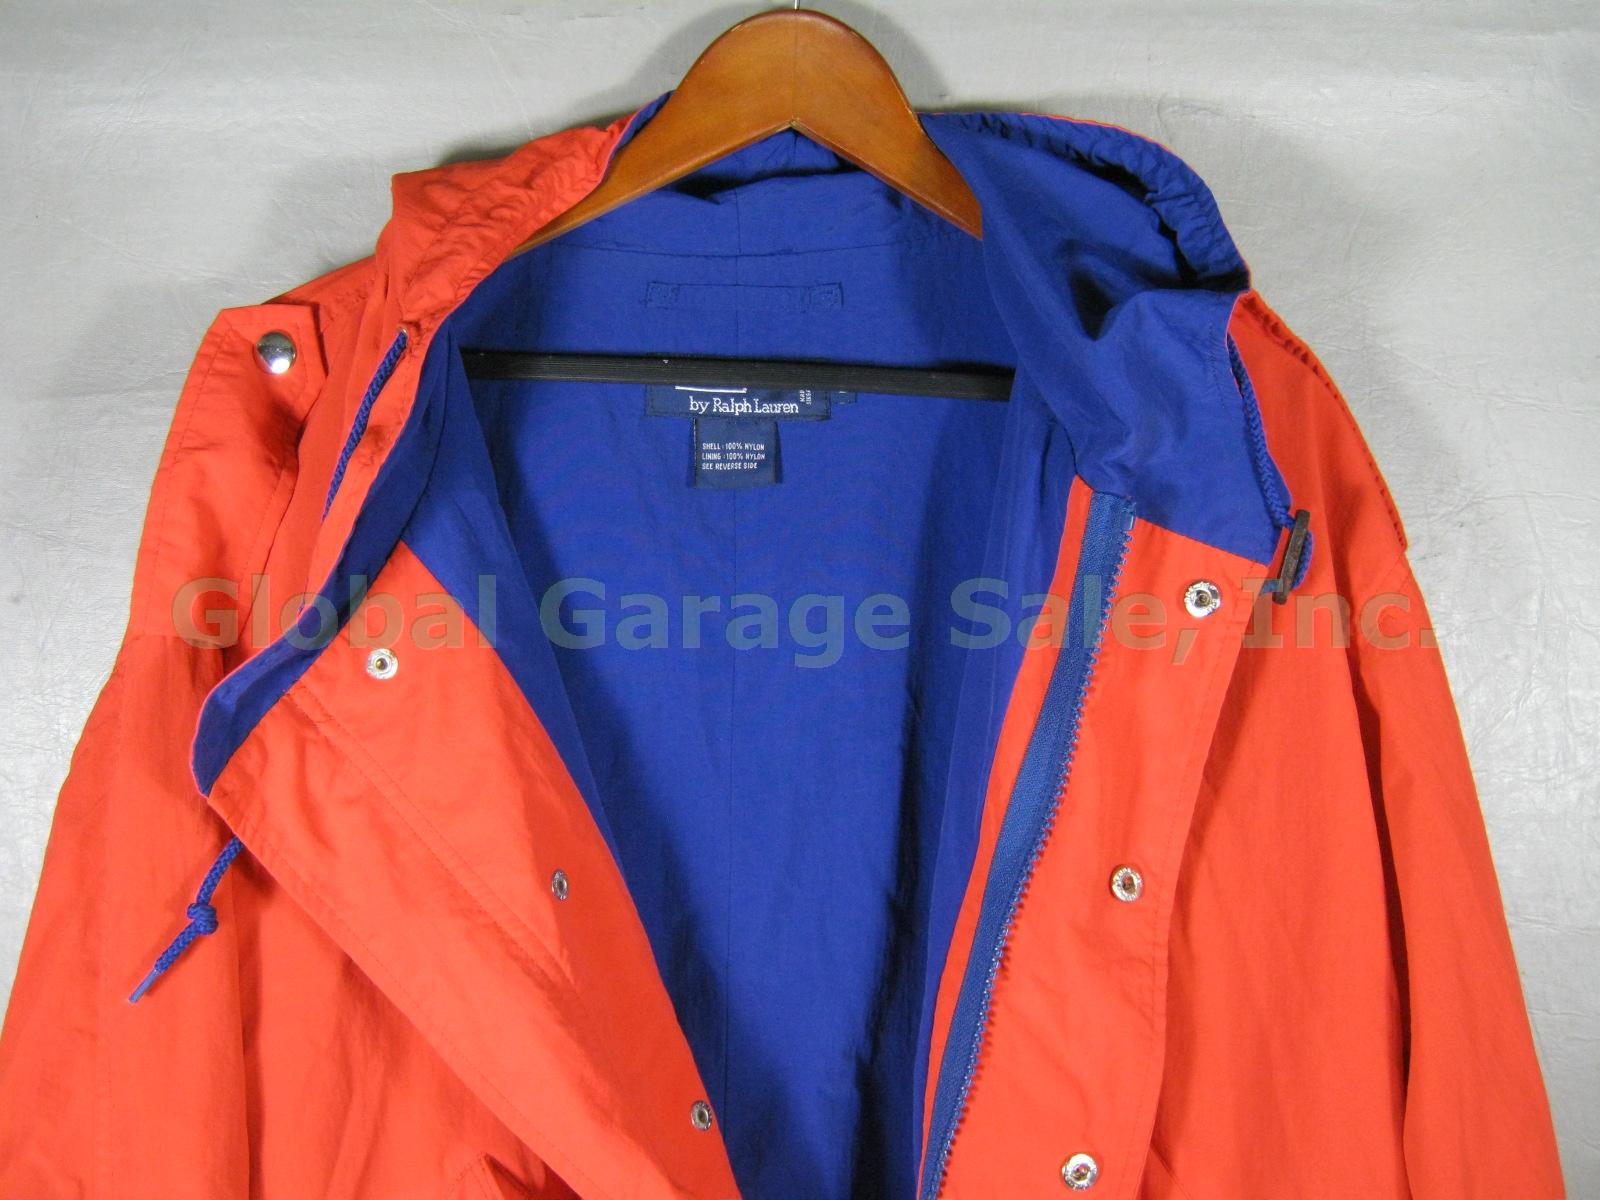 Vintage Polo By Ralph Lauren RL-92 Orange Field Jacket Size Large Never Worn! 5